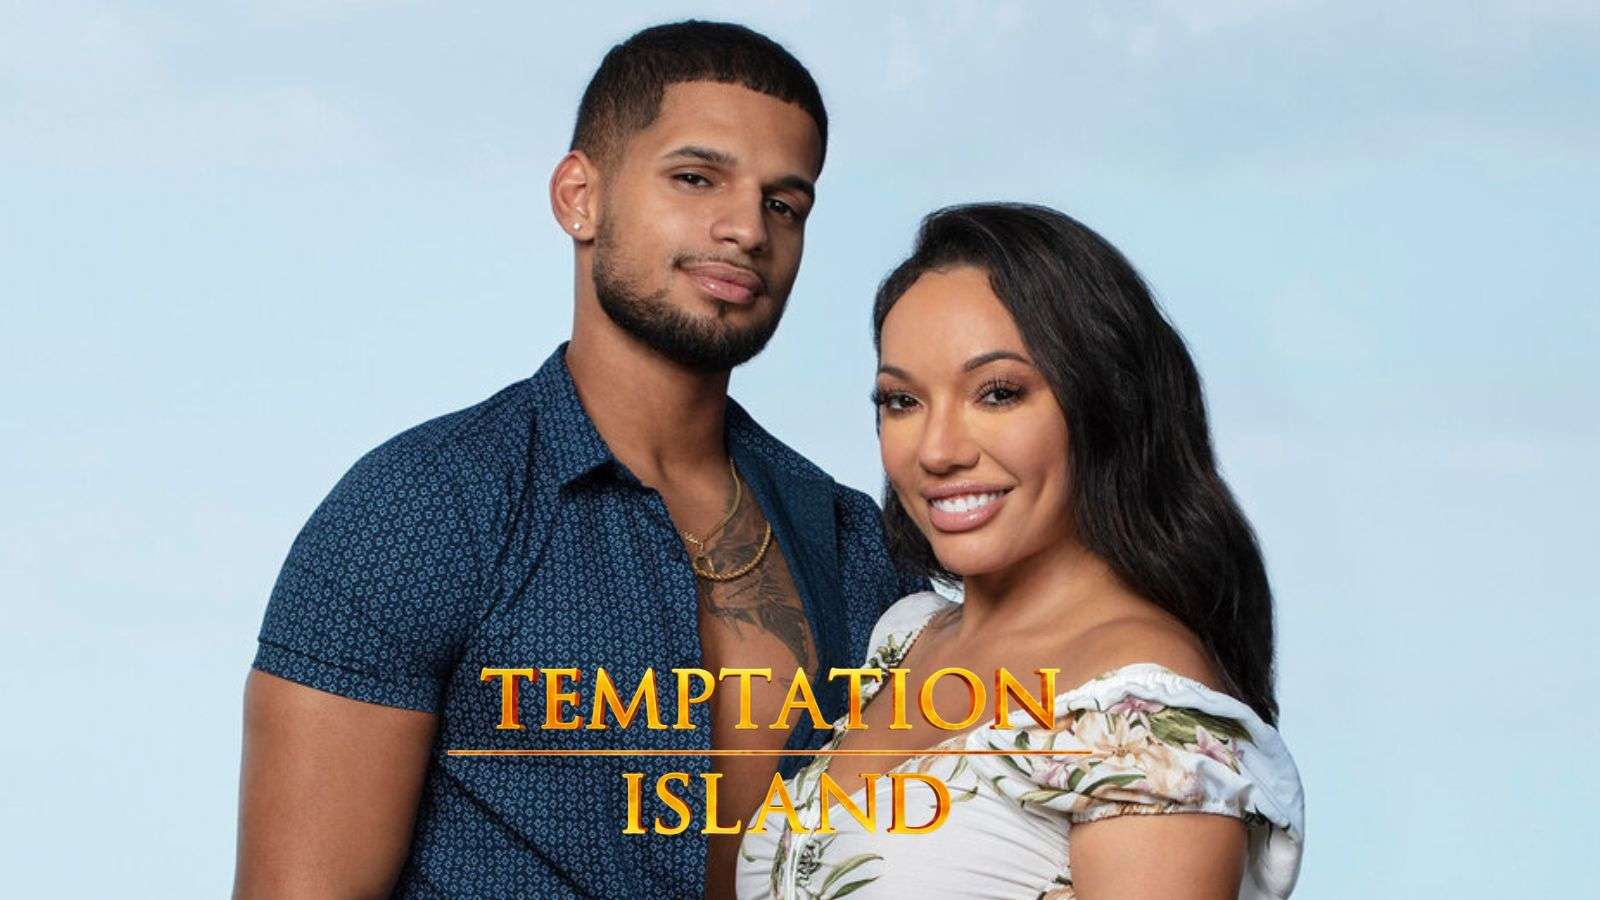 Vanessa and Roberto from Temptation Island